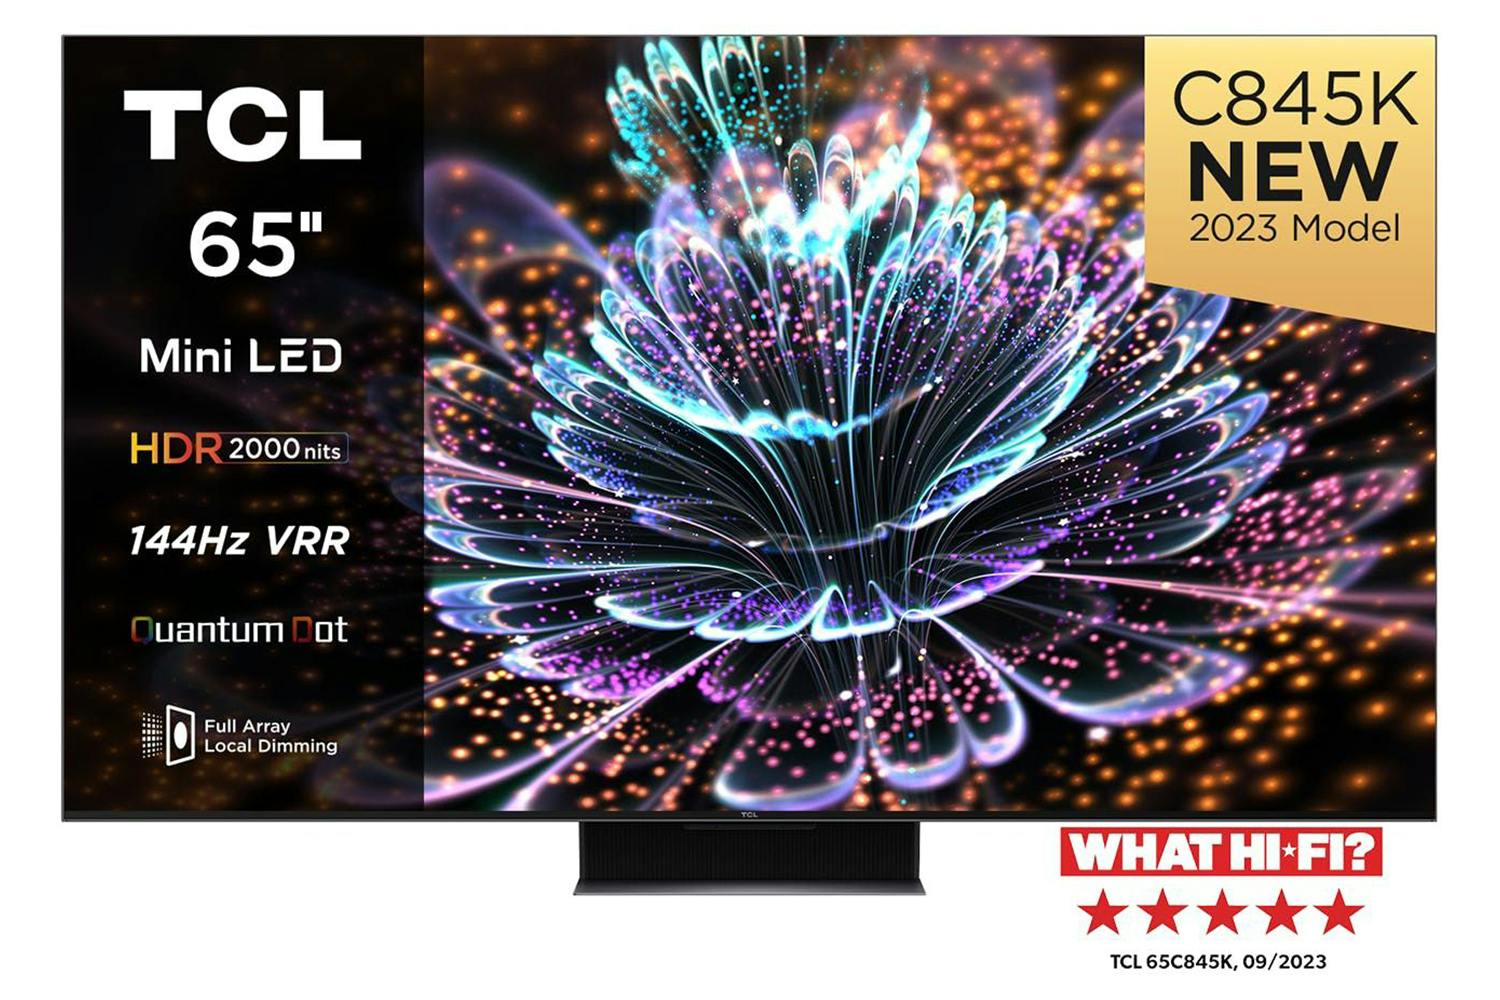 TCL 65" 4K Ultra HD HDR QLED Google TV | 65C845K